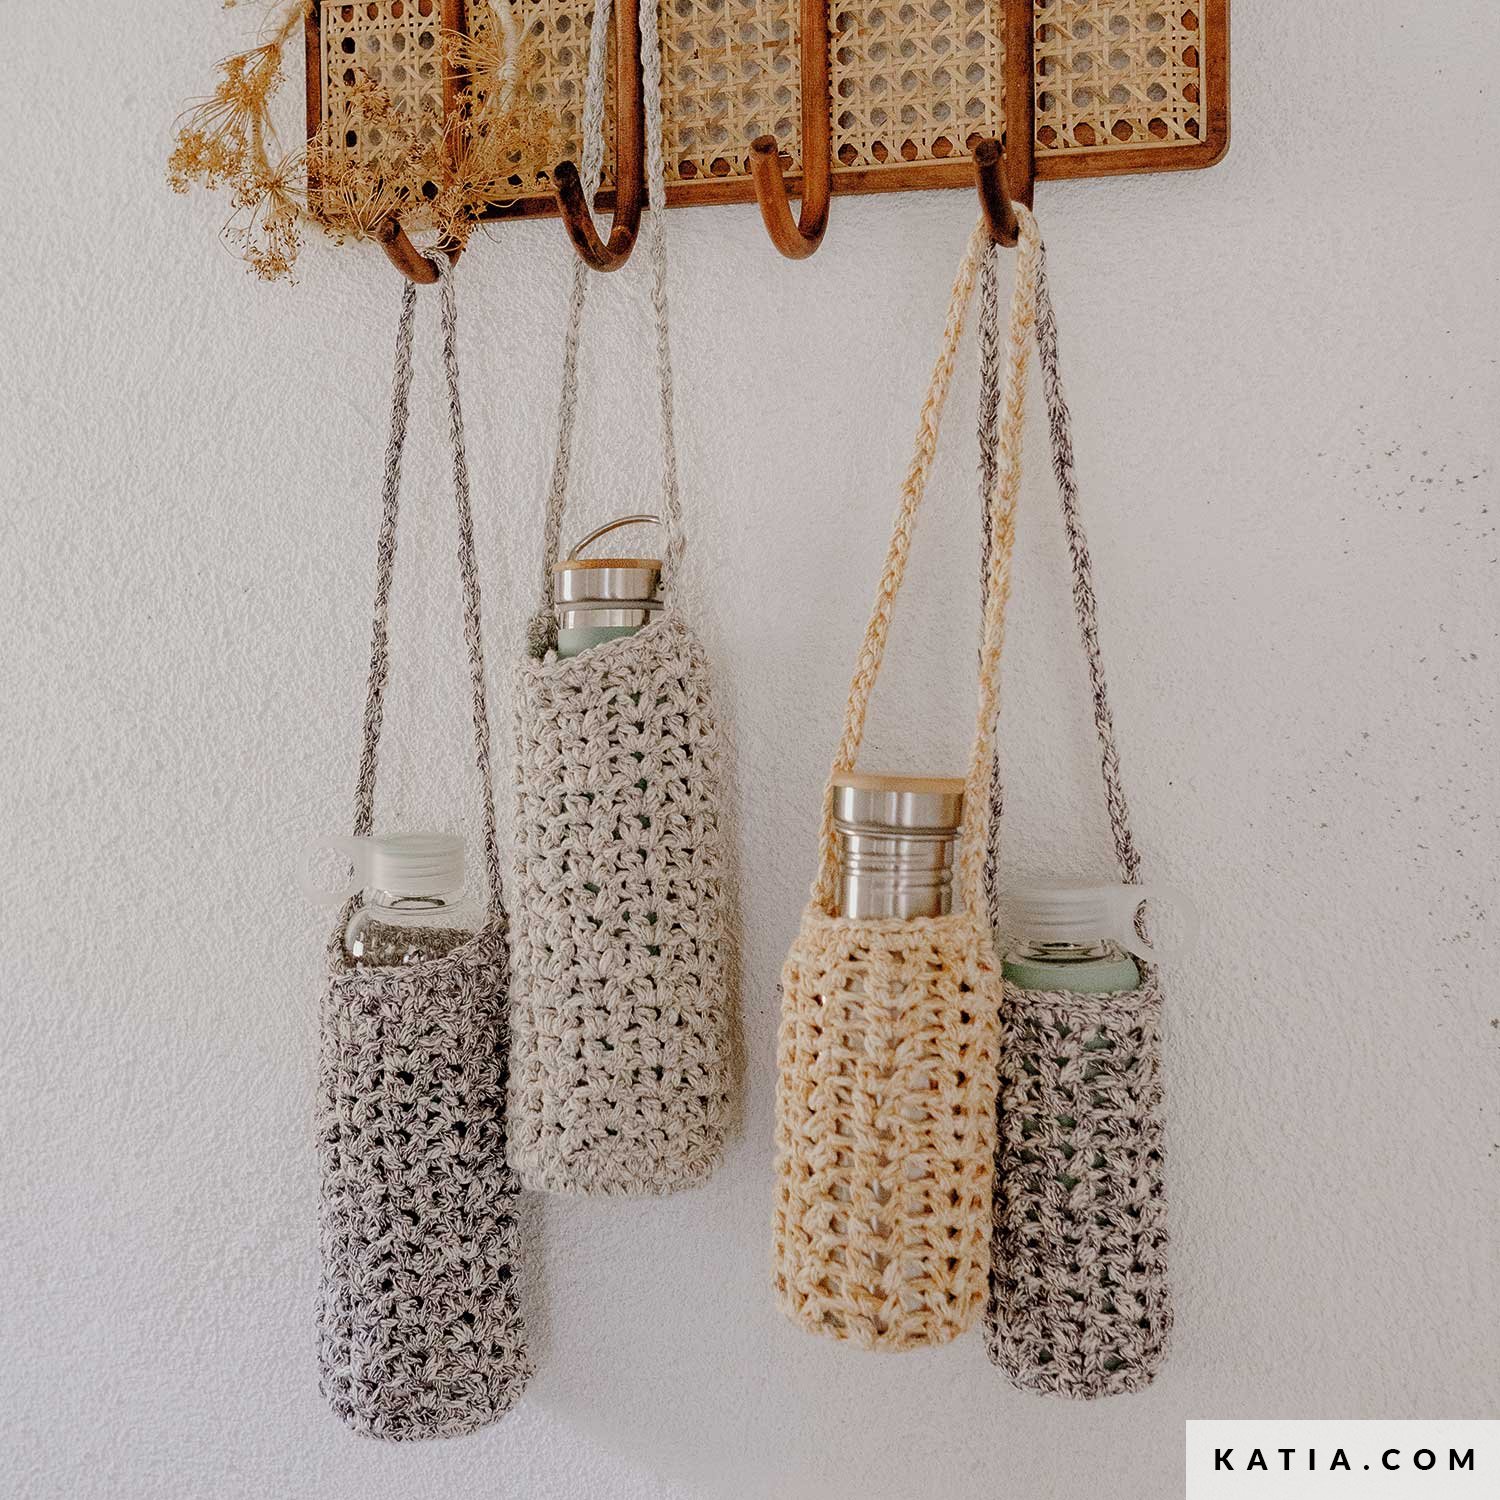 https://www.katia.com/files/mod/8037/pattern-knit-crochet-home-bottle-holder-spring-summer-katia-8037-450-g.jpg